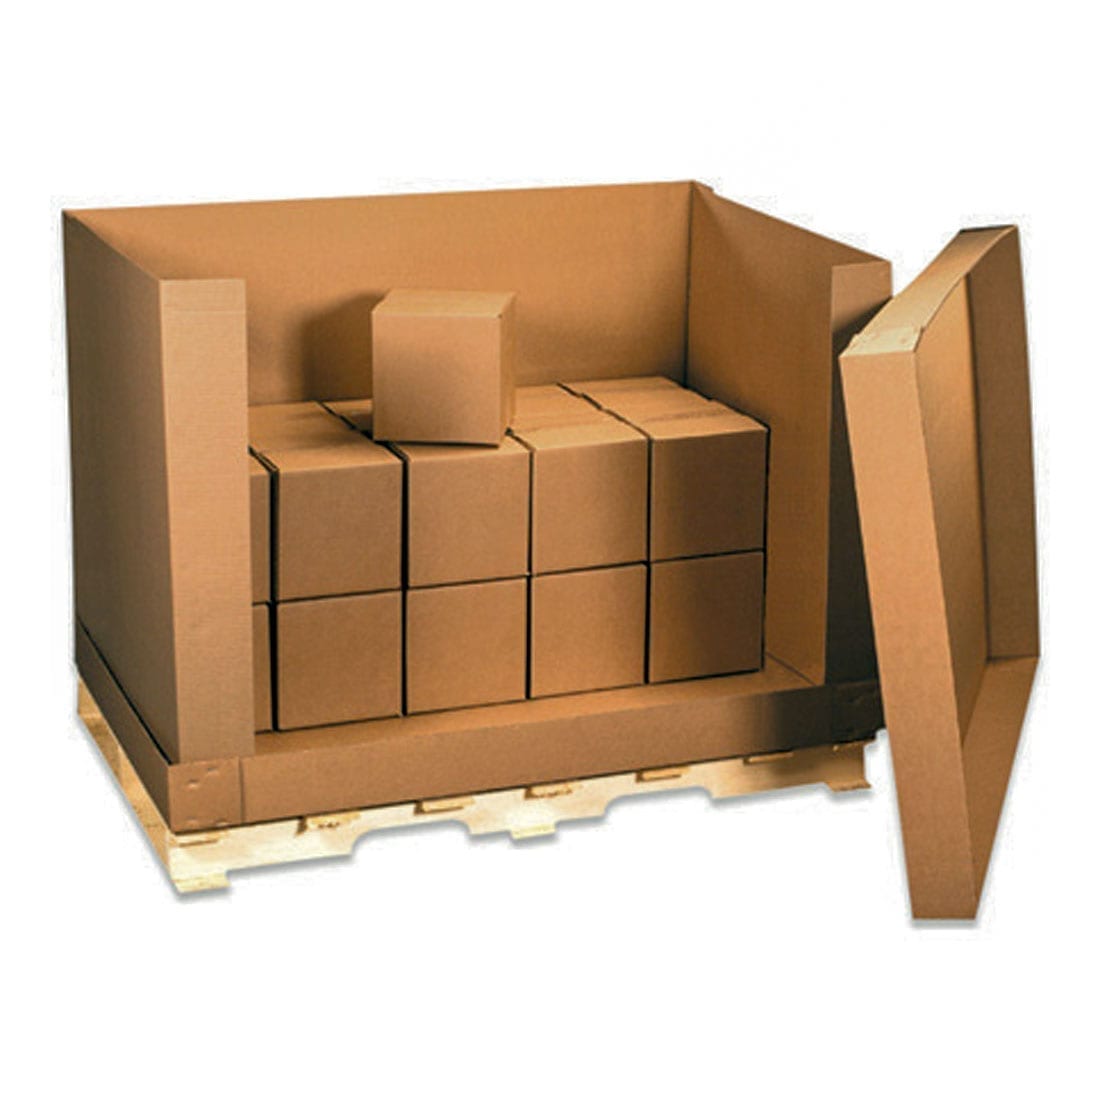 Buy Air Cargo Boxes - Quantum Industrial Supply, Inc., Flint, MI - Flint, MI